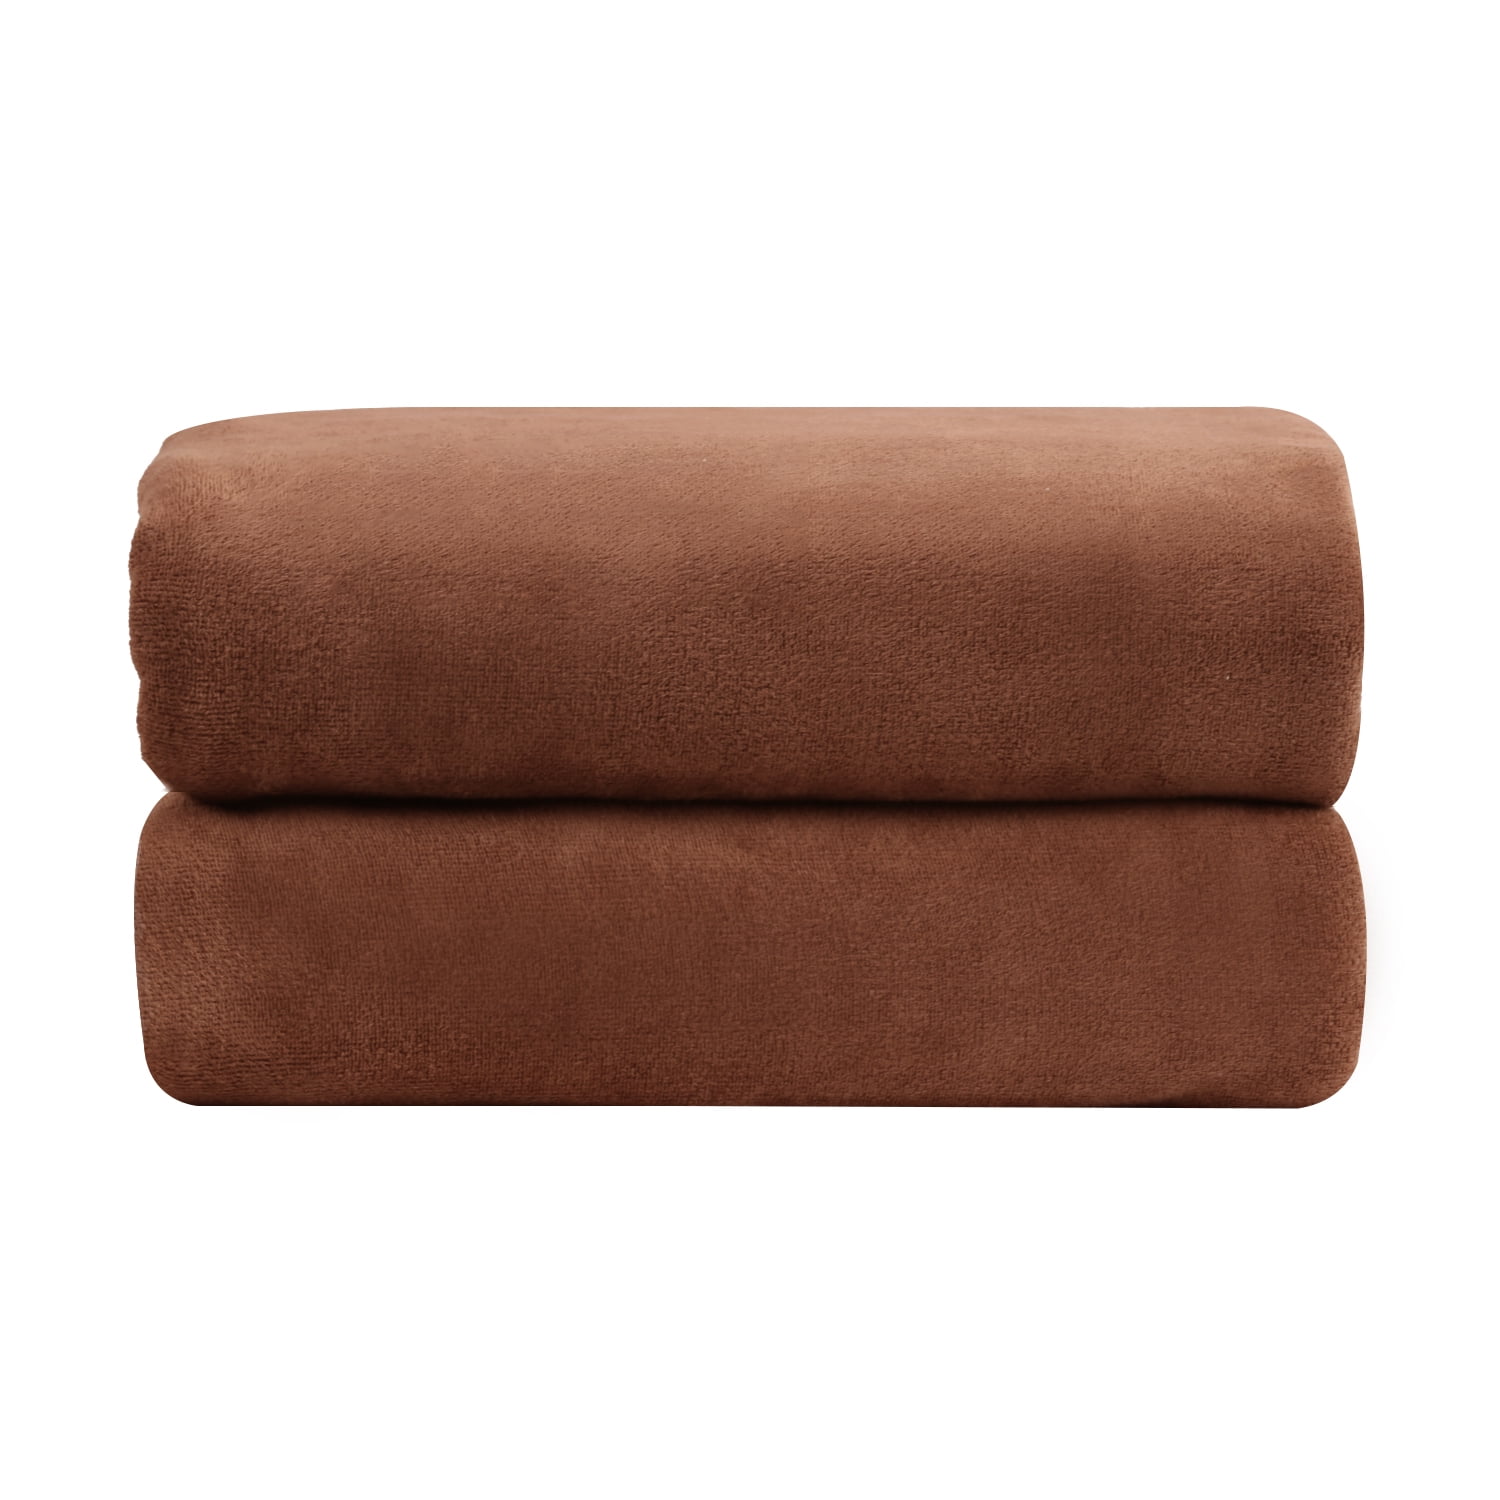 Beach Towel with Bag Microfiber Soft Comfortable Plain Dyed for Bathroom Travel 